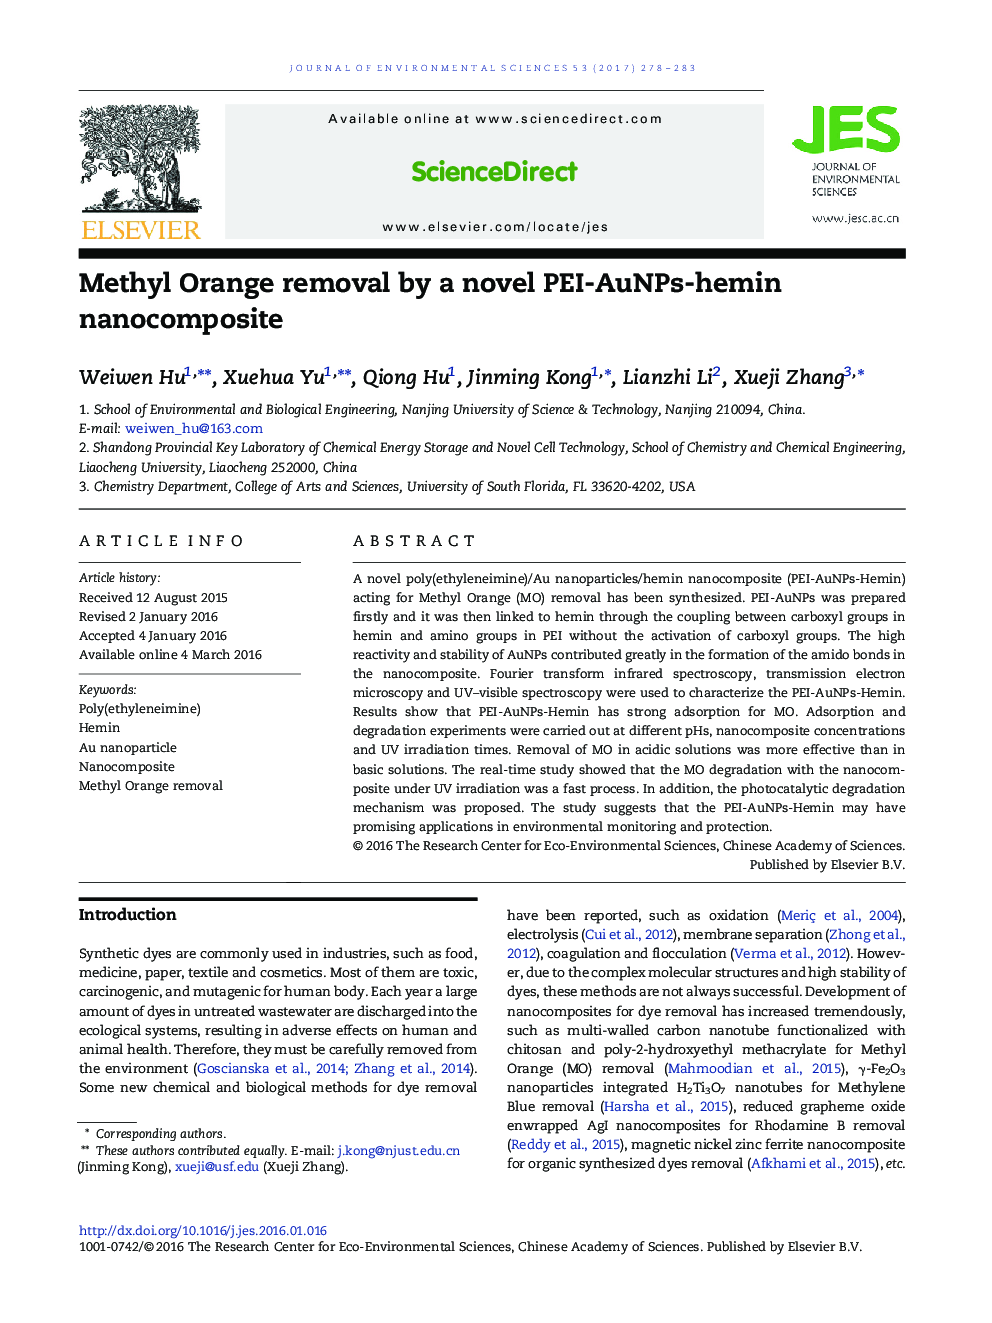 Methyl Orange removal by a novel PEI-AuNPs-hemin nanocomposite